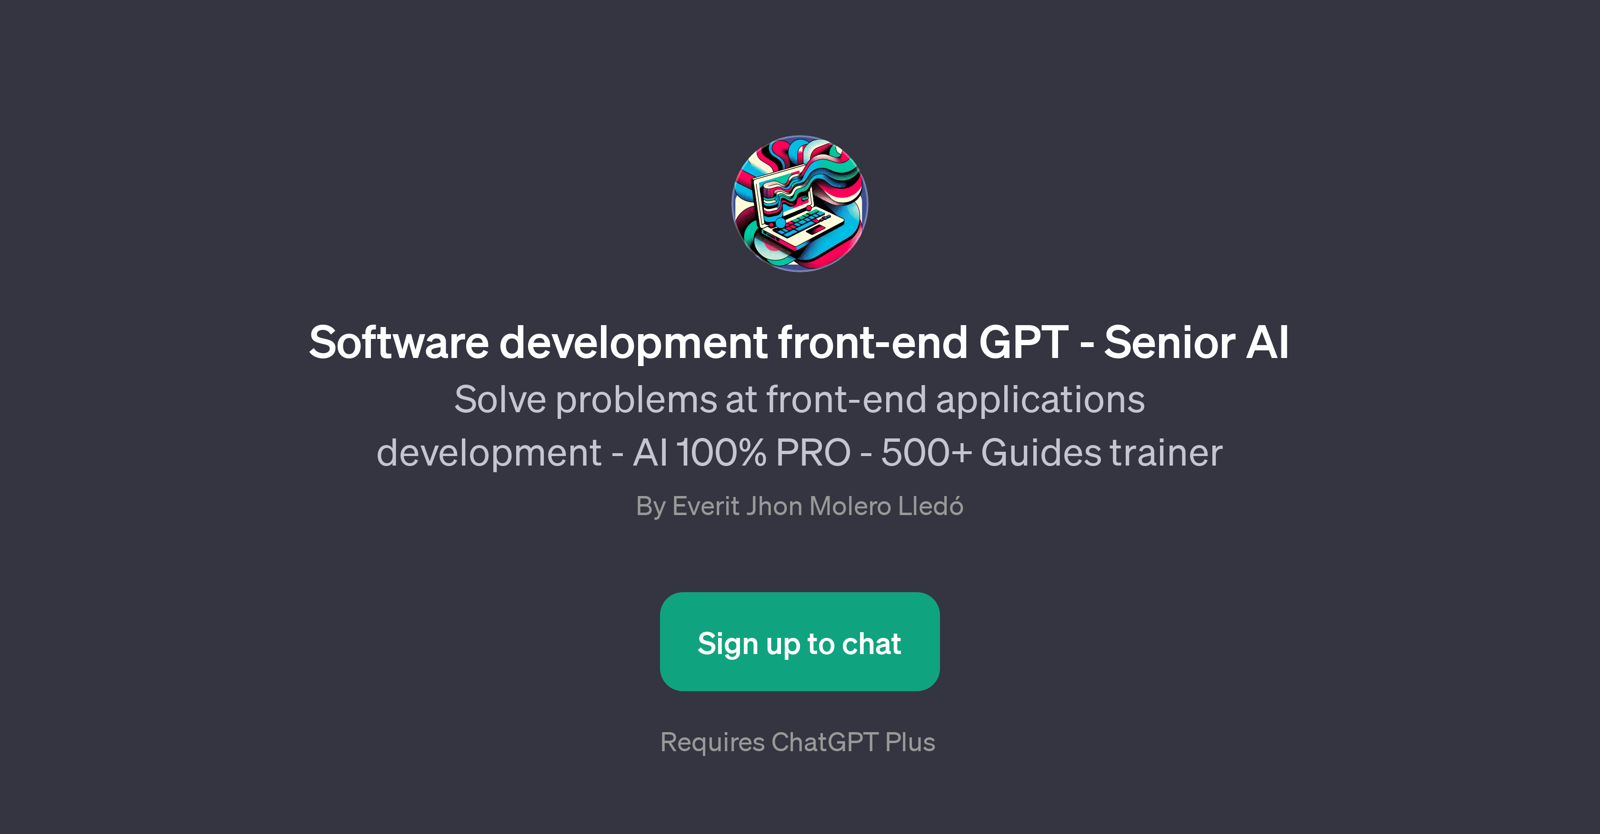 Software development front-end GPT - Senior AI website